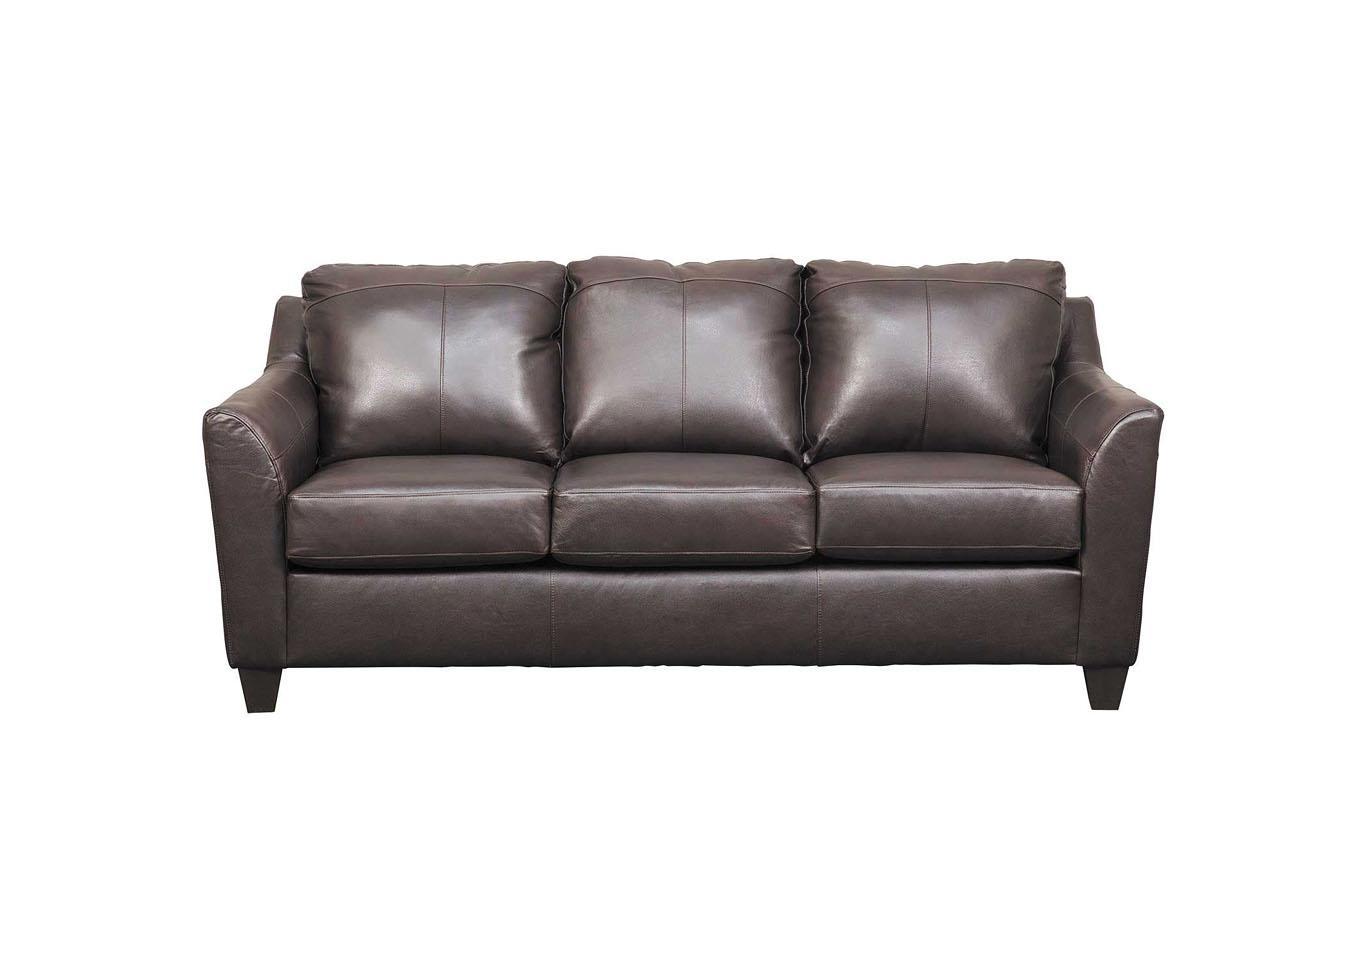 Lane Furniture "Grant" Top Grain Leather / Mate Sofa Sleeper - Bark,Instore